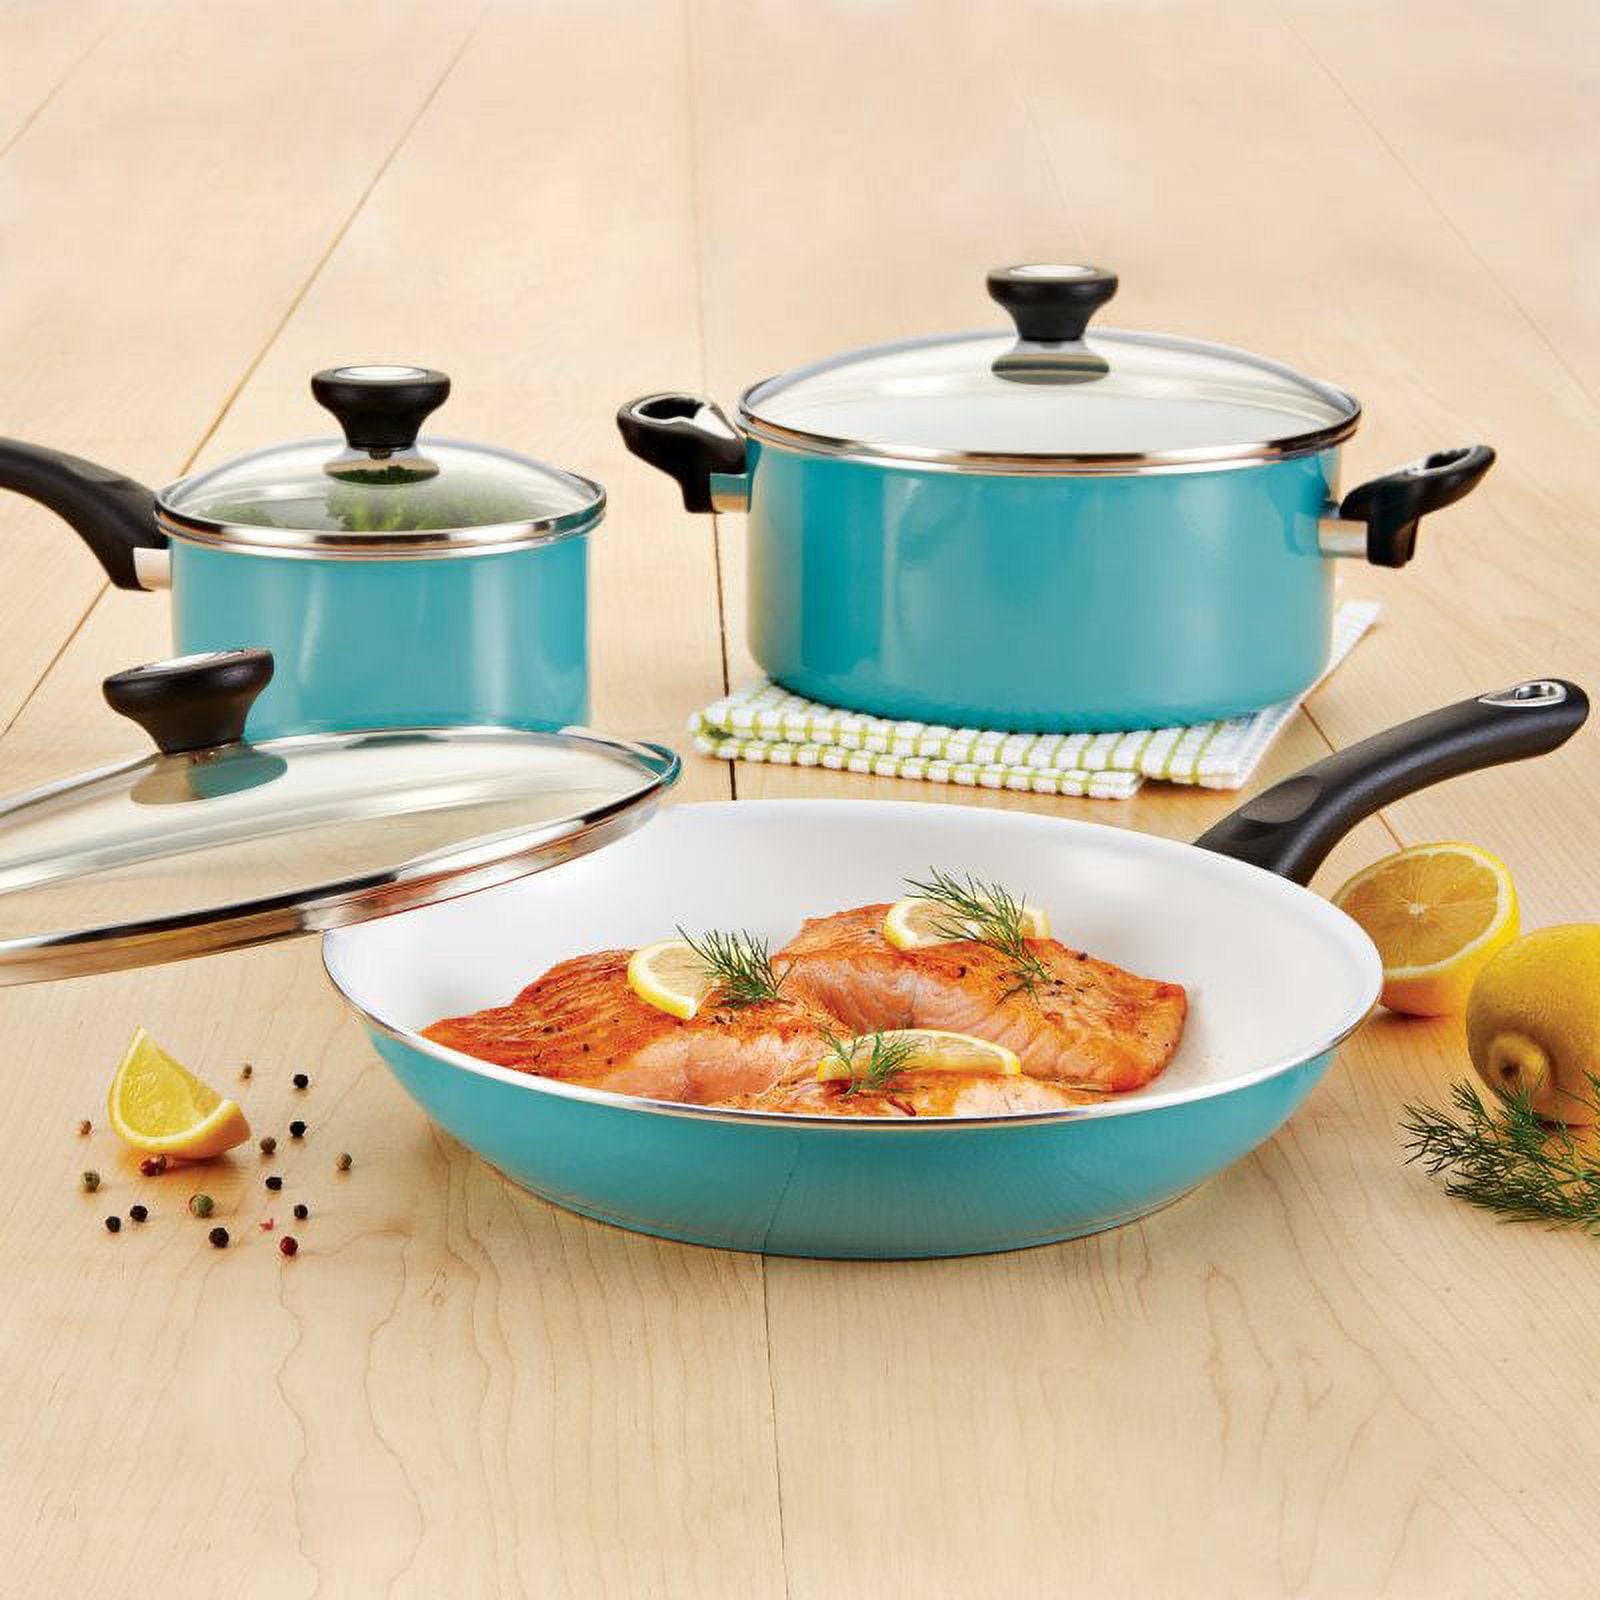  Farberware Ceramic Dishwasher Safe Nonstick Cookware Pots and  Pans Set, 12 Piece, Blue: Home & Kitchen